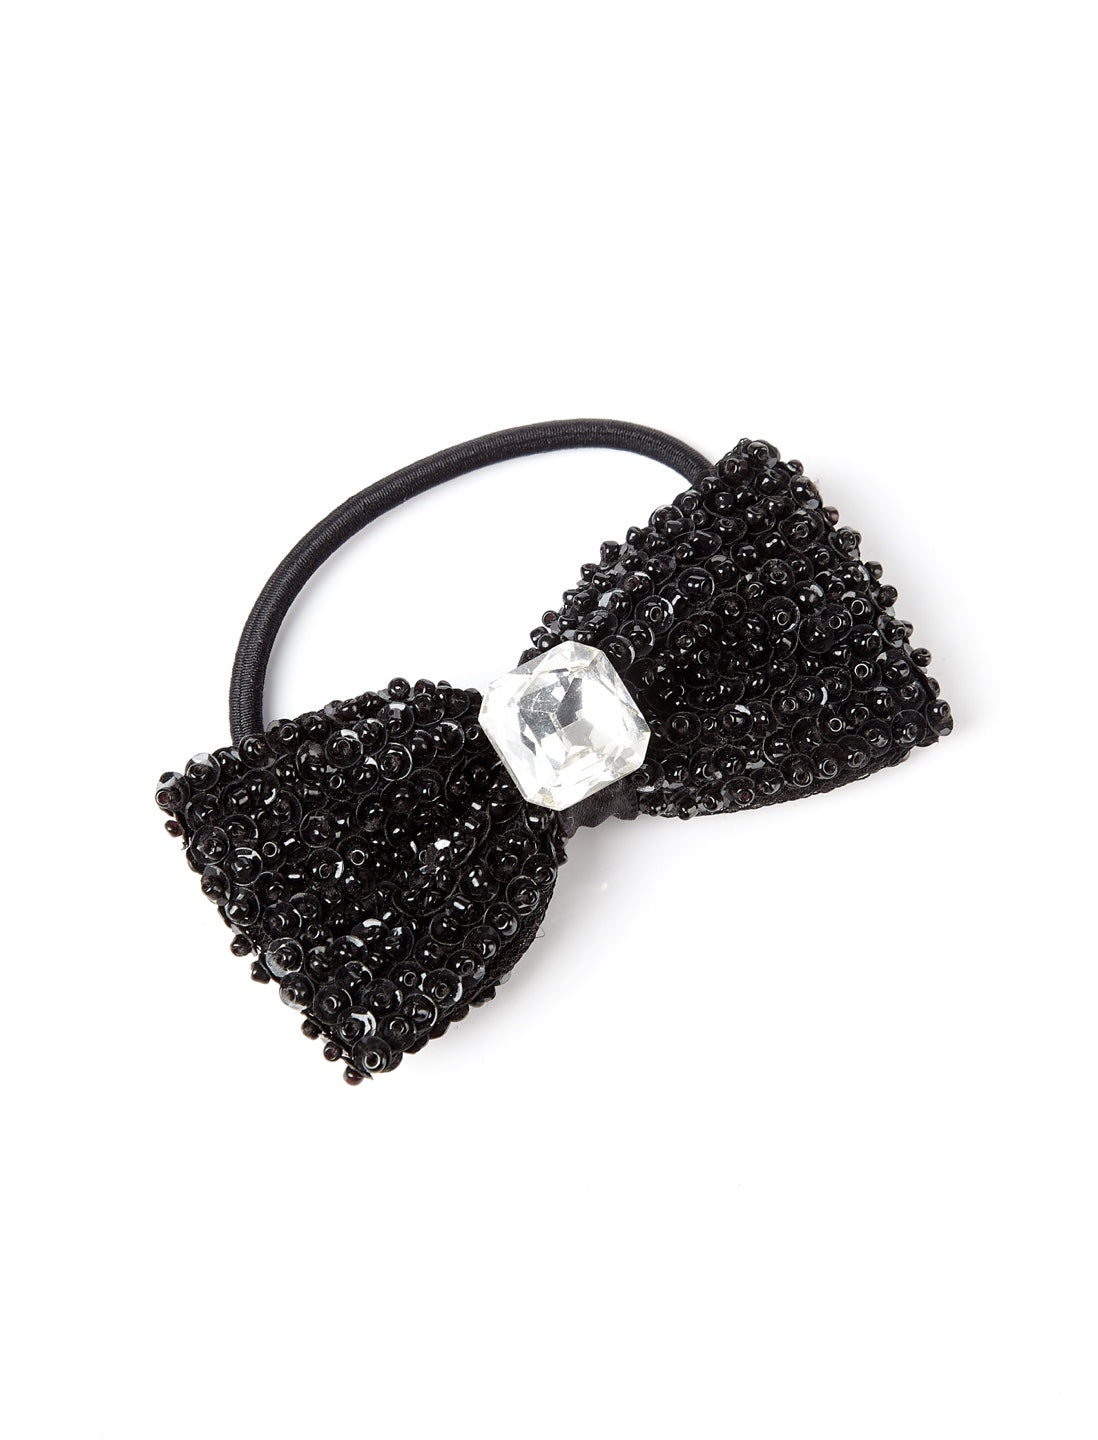 Big Bow Crystal beads Hair Tie & Bracelet handmade